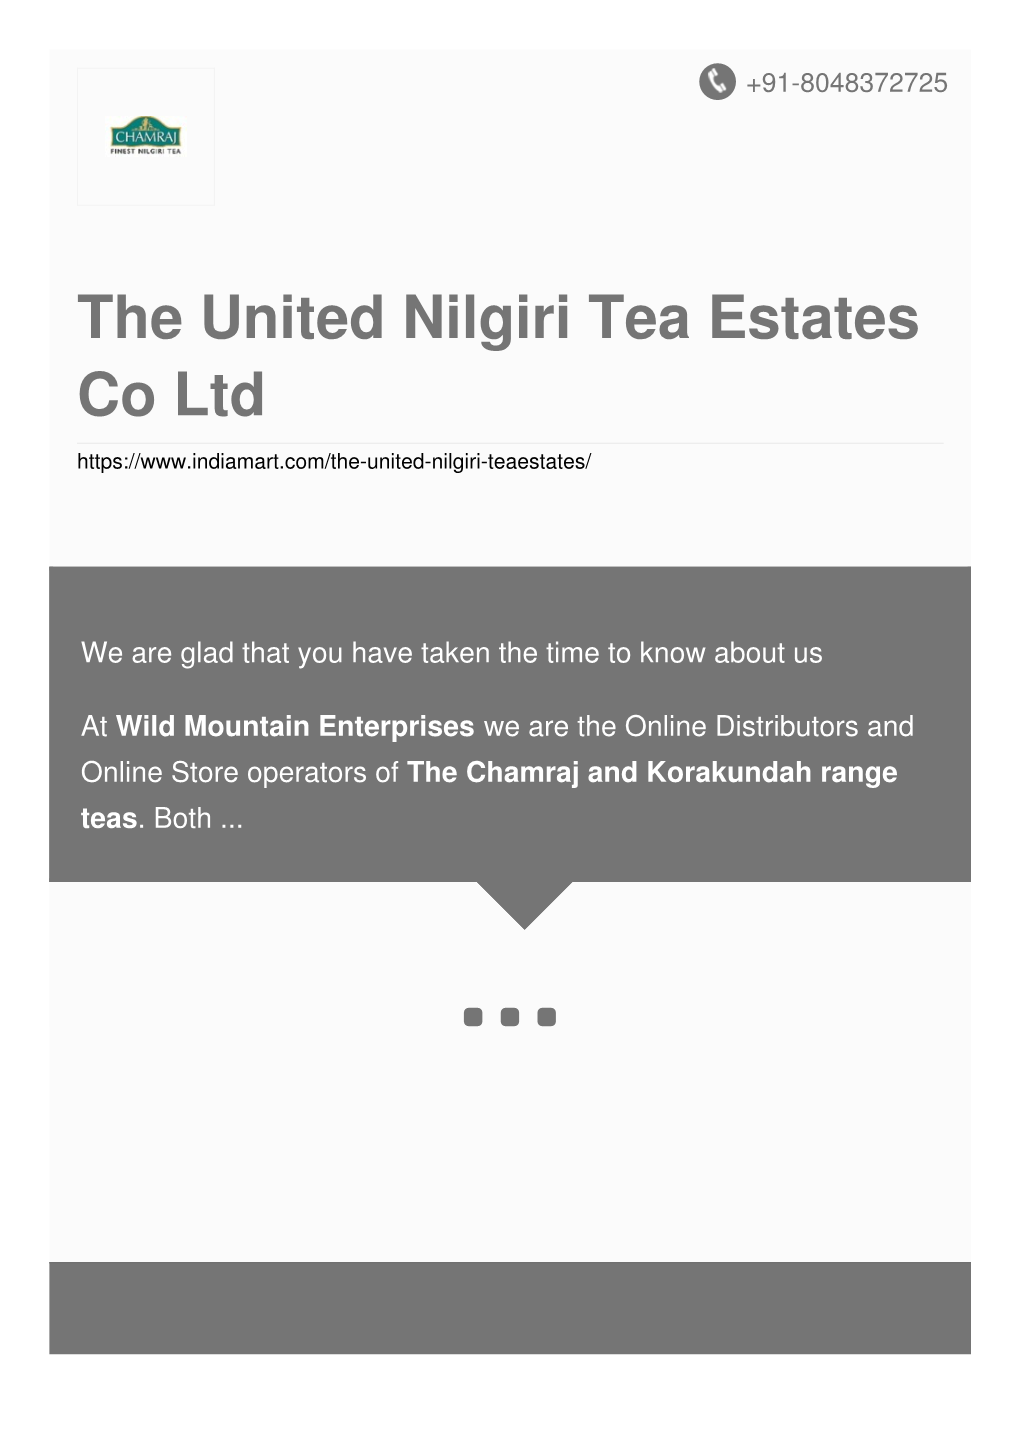 The United Nilgiri Tea Estates Co Ltd